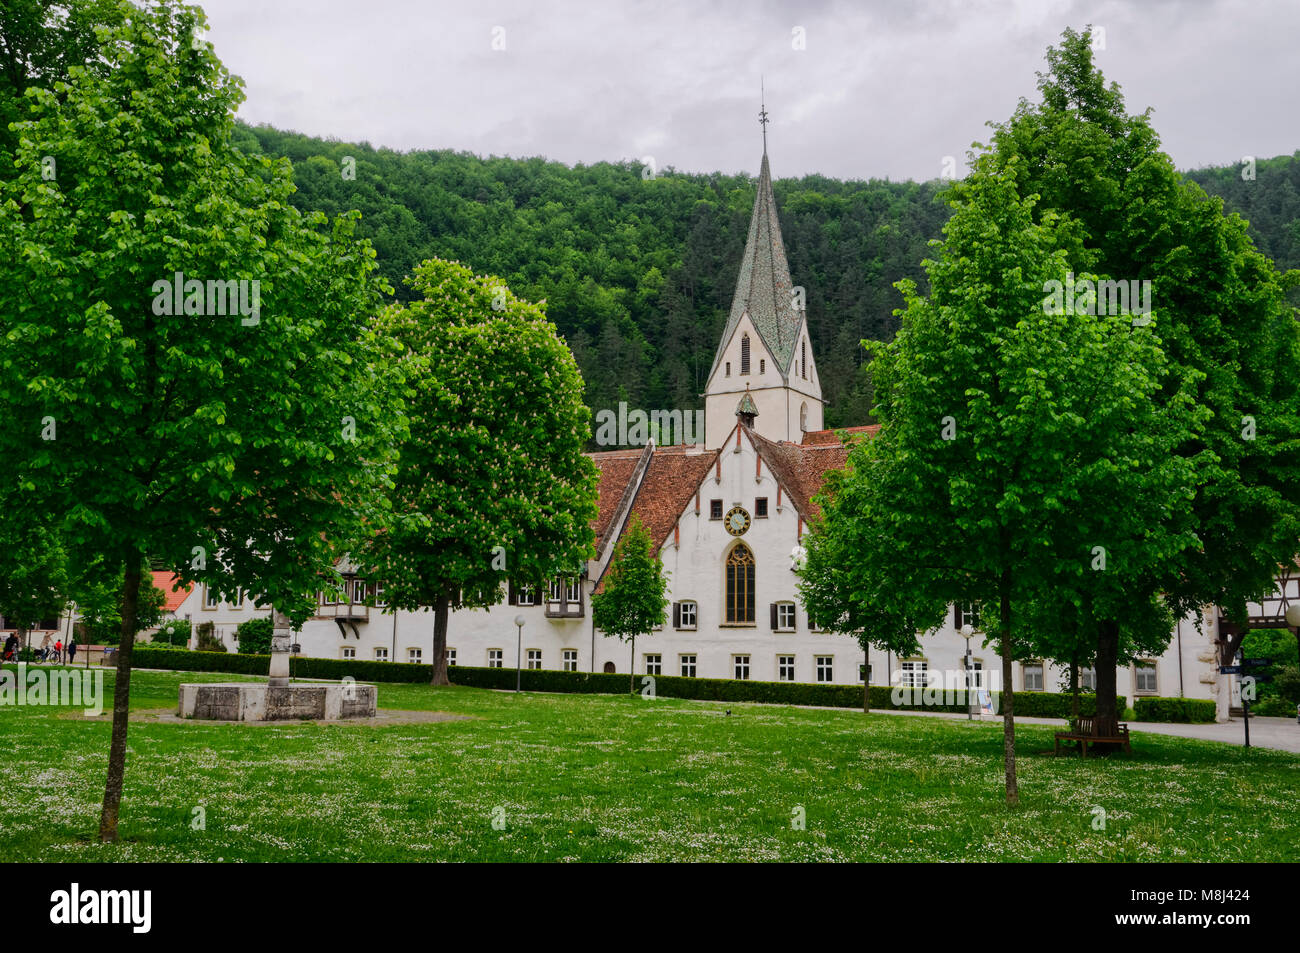 Monastery Blaubeuren, at the southern edge of the Swabian Alps, Alb - Donau District, Baden-Württemberg, Germany Stock Photo